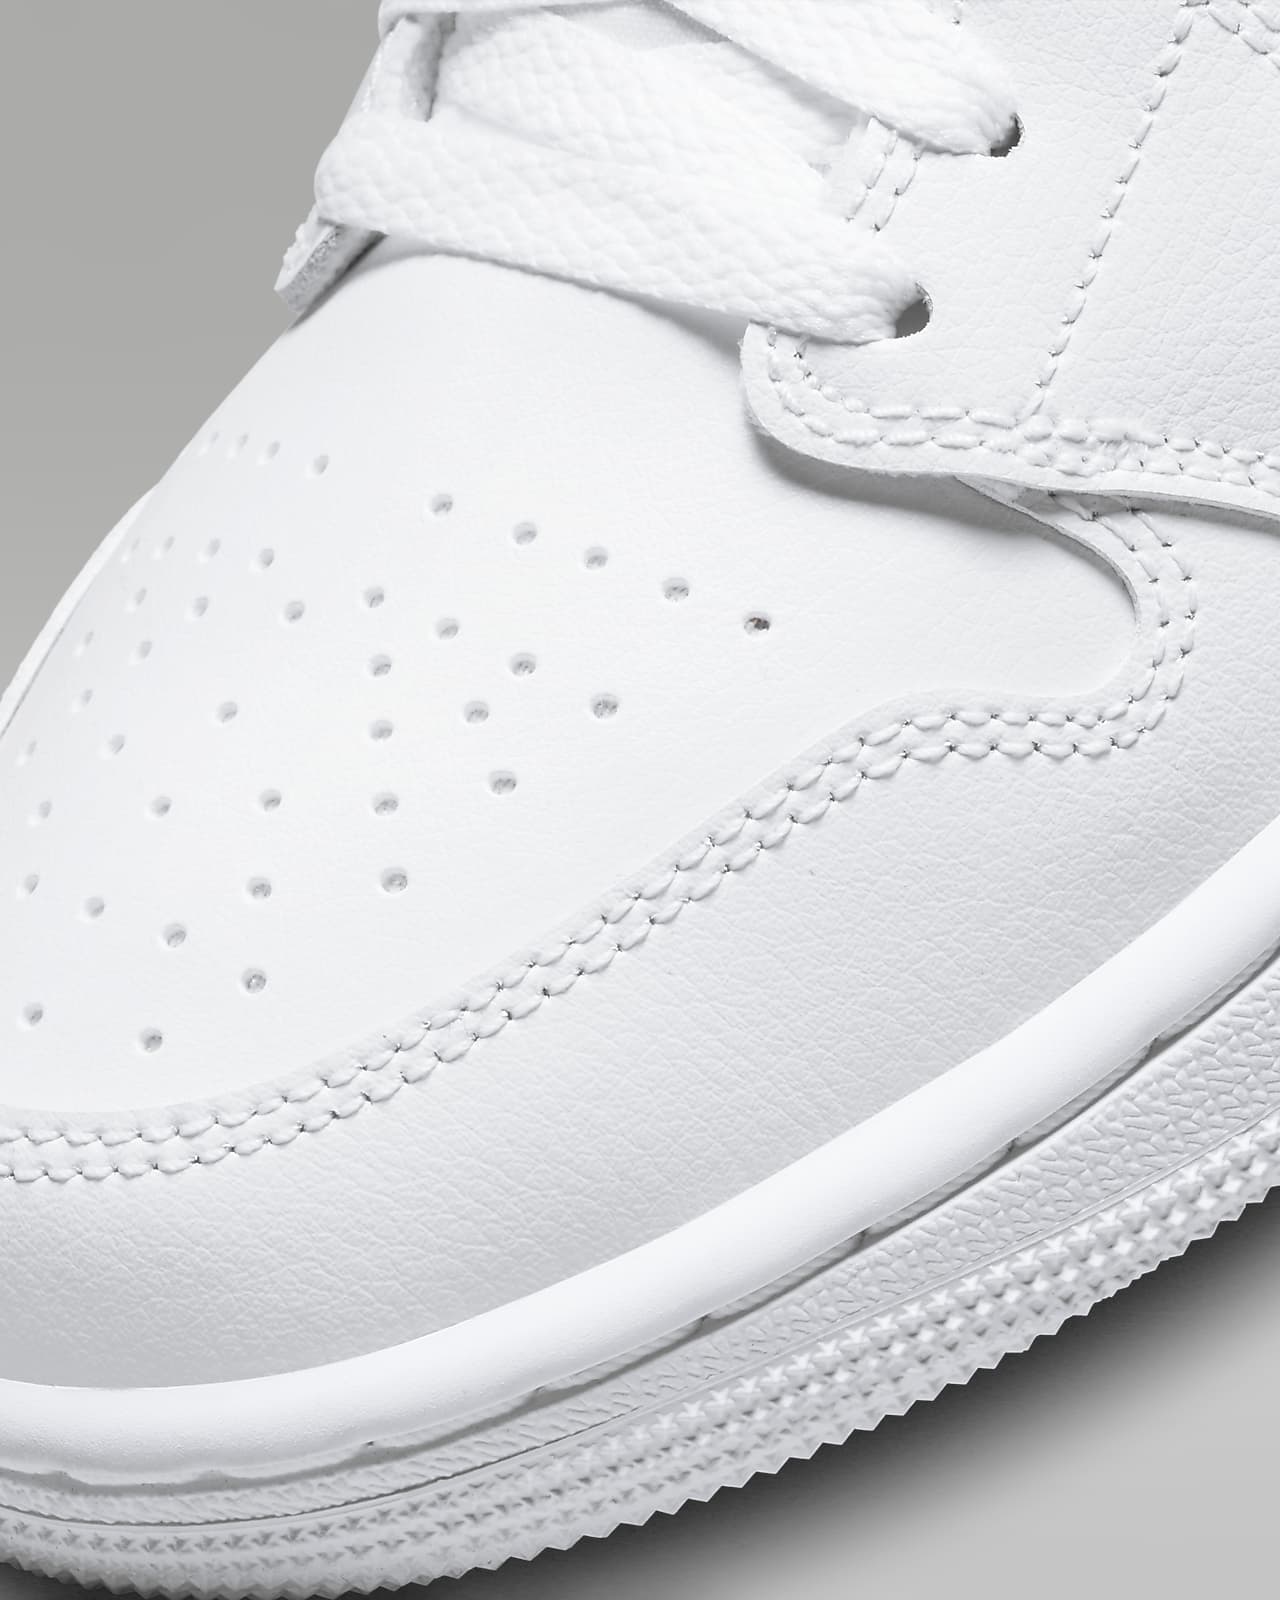 Air Jordan 1 Low Golf Triple White: PH price, release